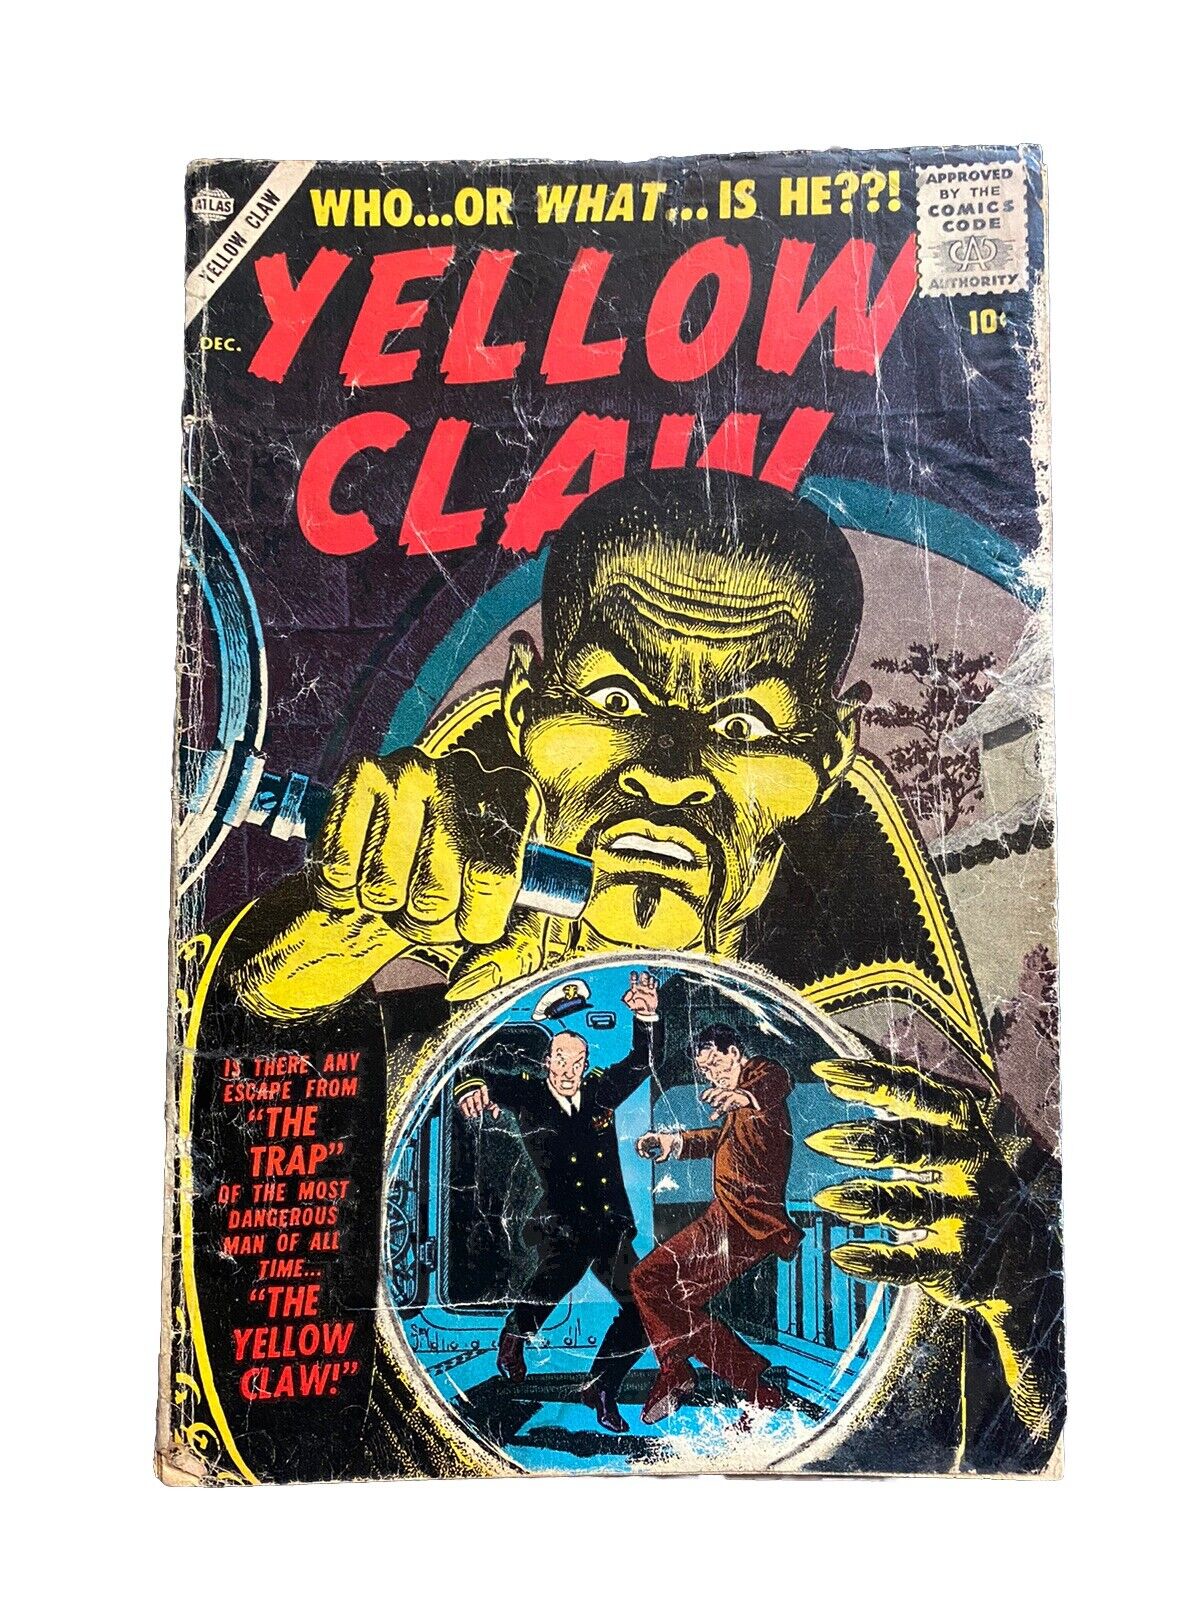 Yellow Claw #2 (Dec, 1956) Rare Atlas series